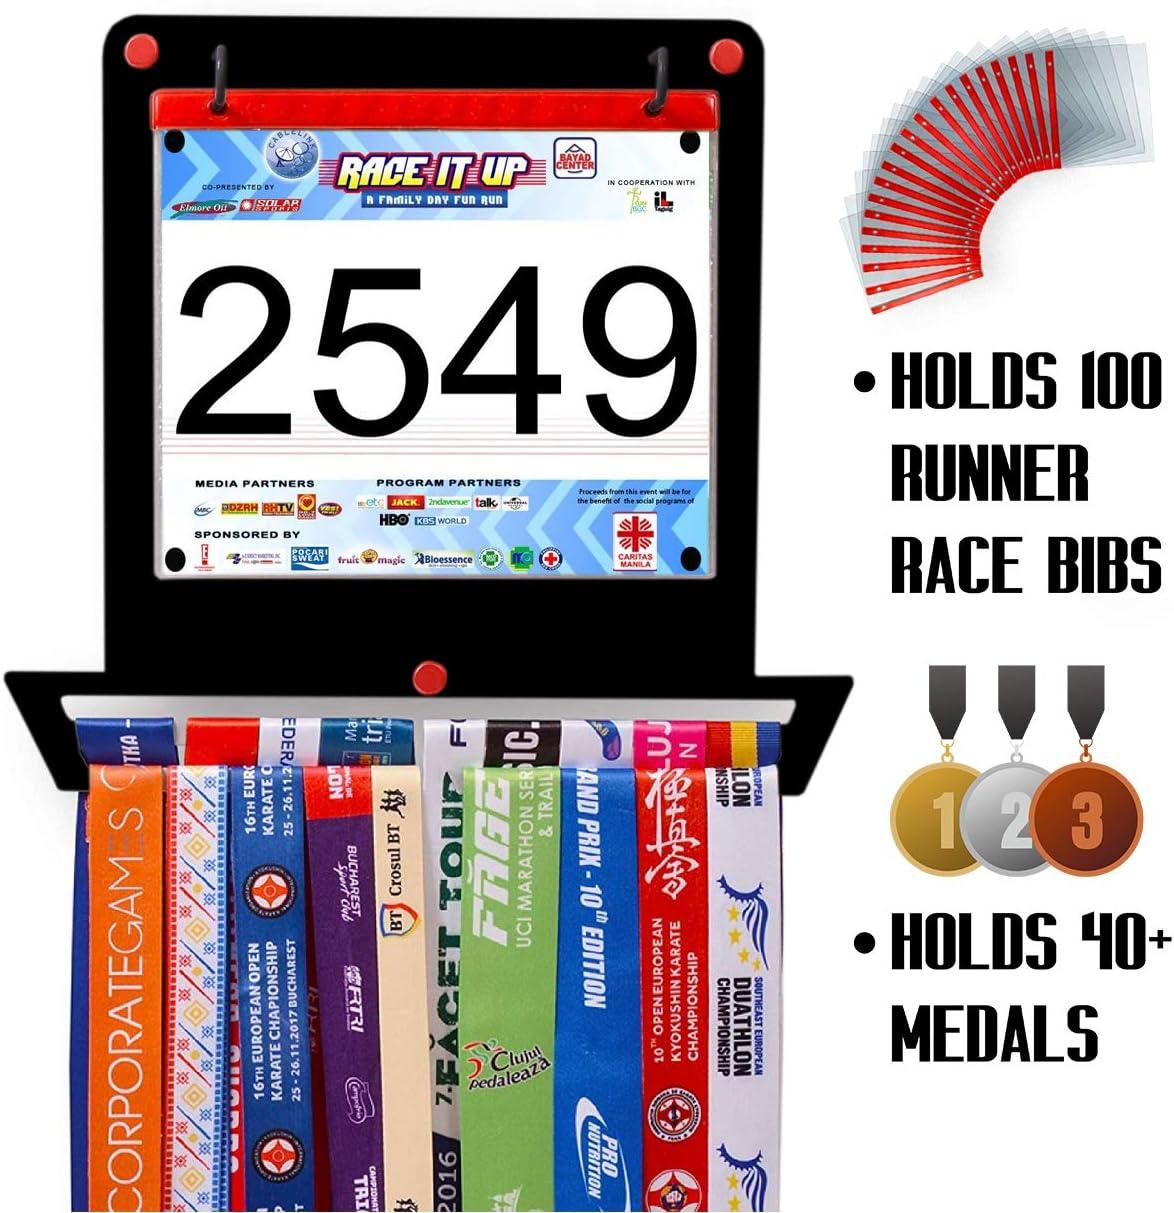 Best Bib Displays  Race bibs, Running medal display, Race bib display